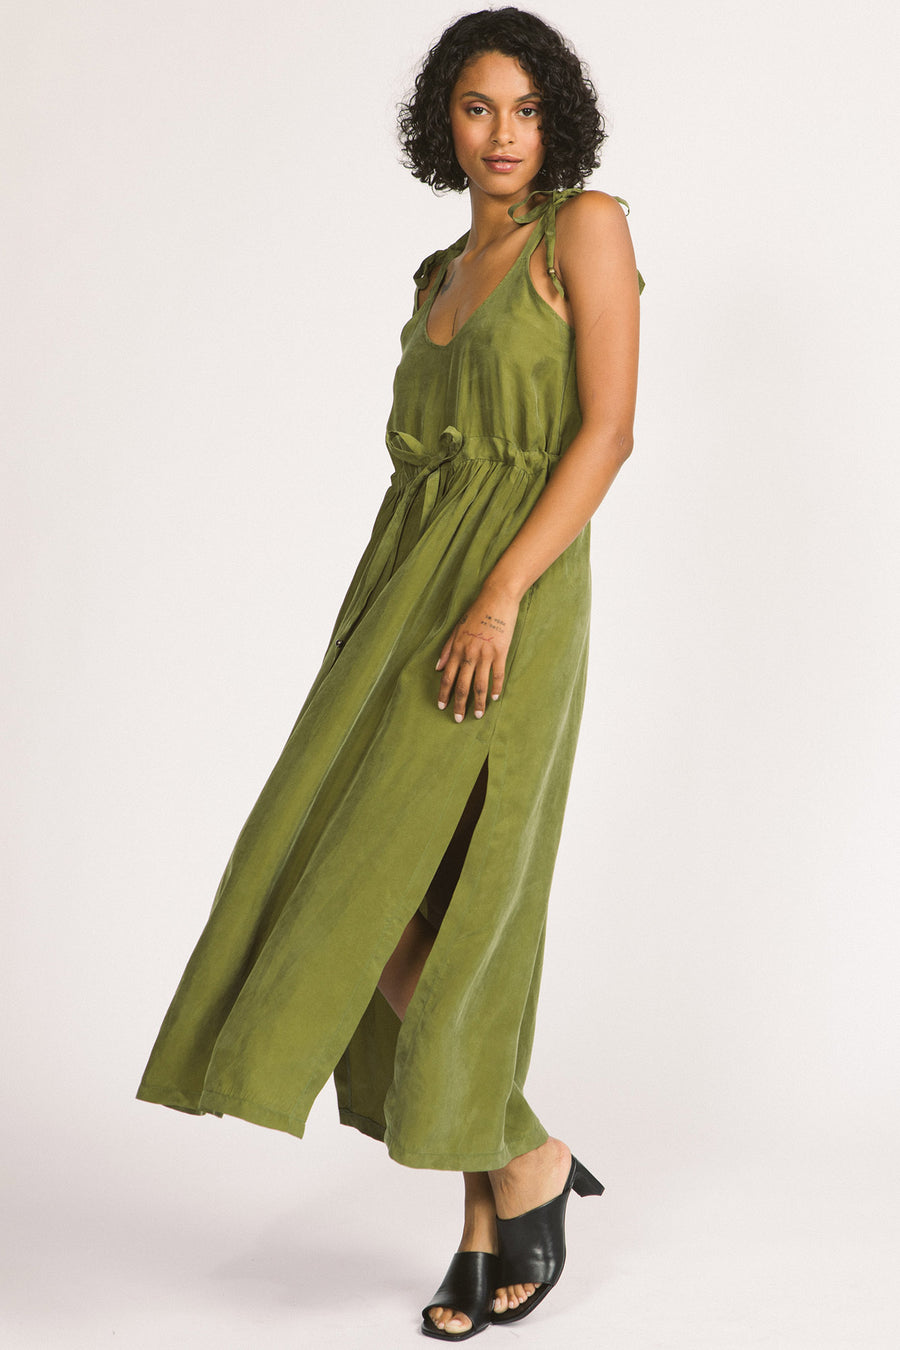 Woman wearing moss green Novalie dress by Allison Wonderland with adjustable shoulder straps and waist. 